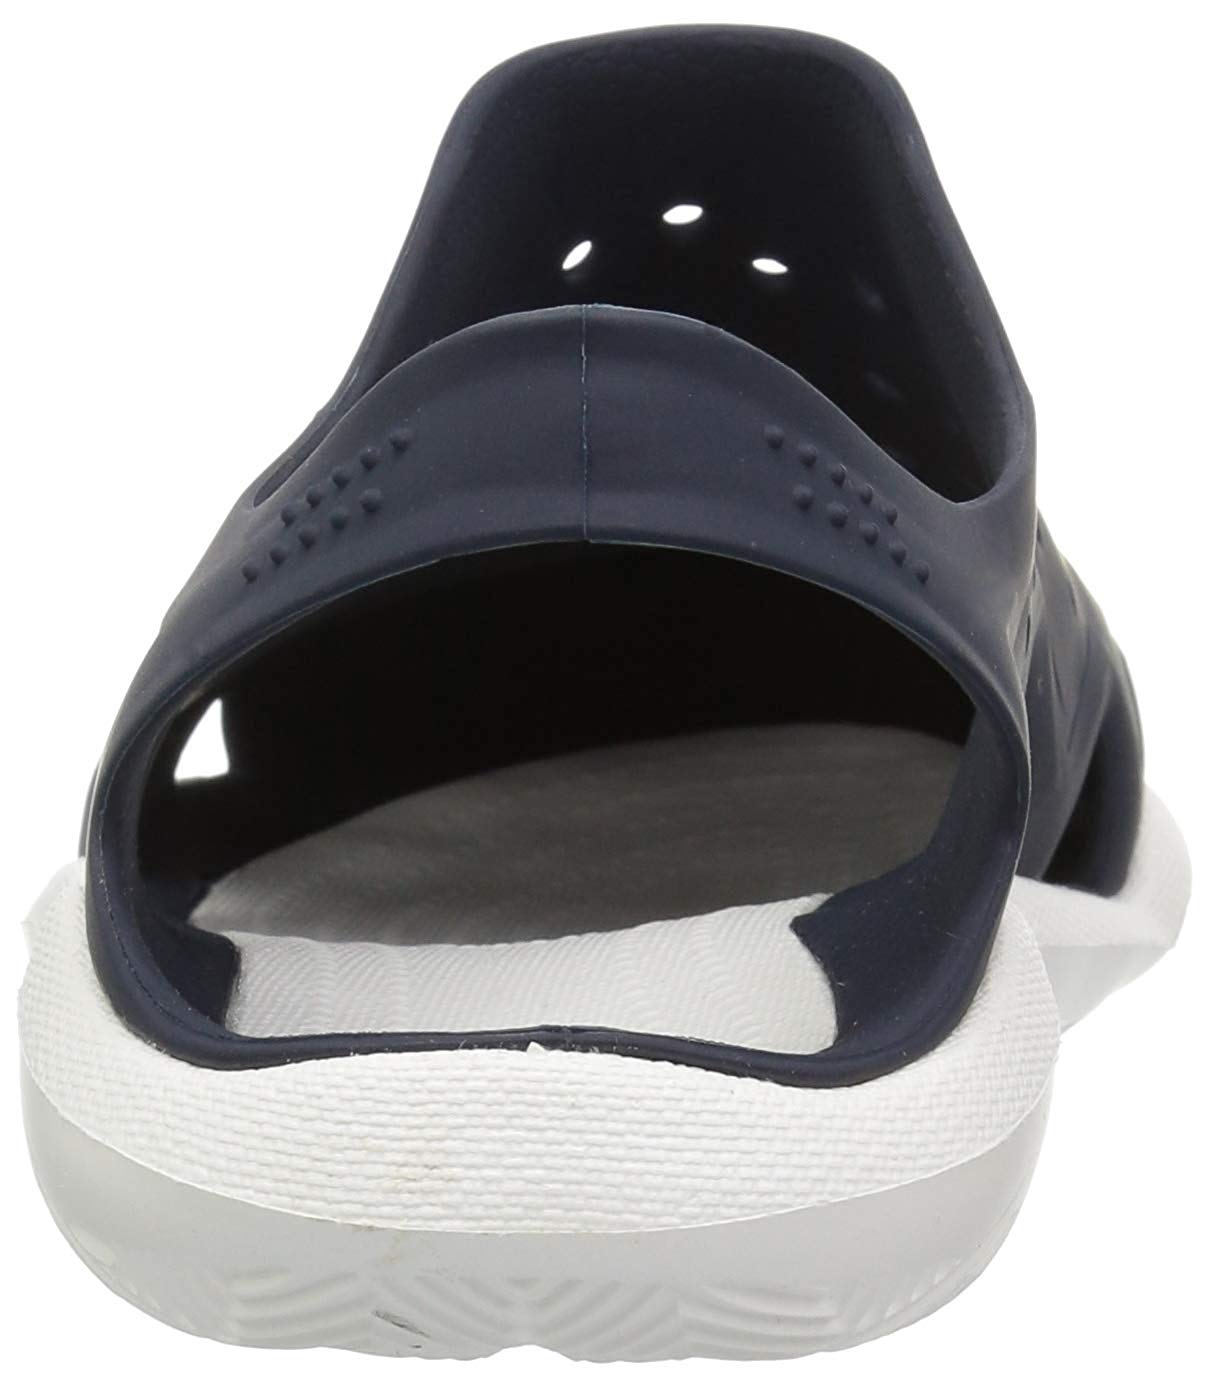 Crocs Mens crocs Closed Toe Slip On Shoes, Navy/White, Size 11.0 1jyA ...